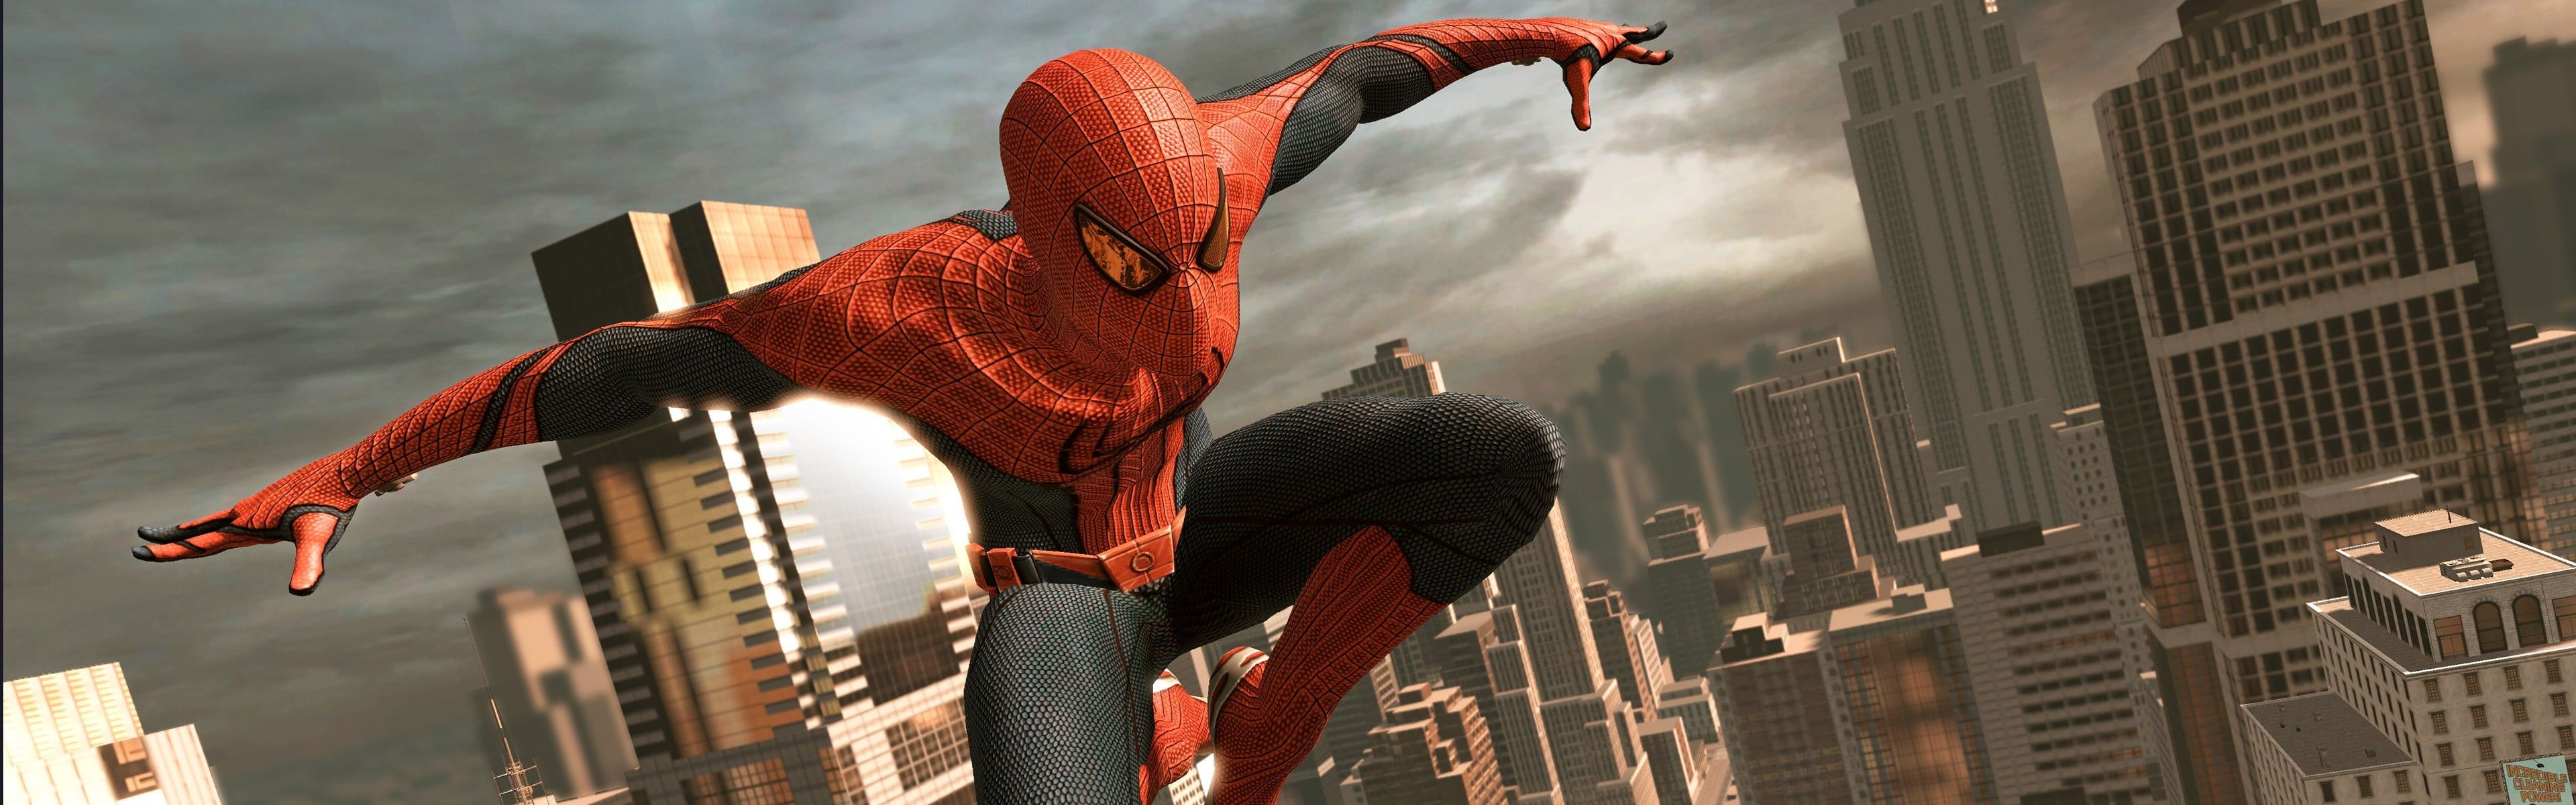 Marvel Spider Man Amazing Spider Man Video Games #city #Manhattan Dual Monitors Multiple Display New York Cit. Marvel Spiderman, Amazing Spider, Amazing Spiderman